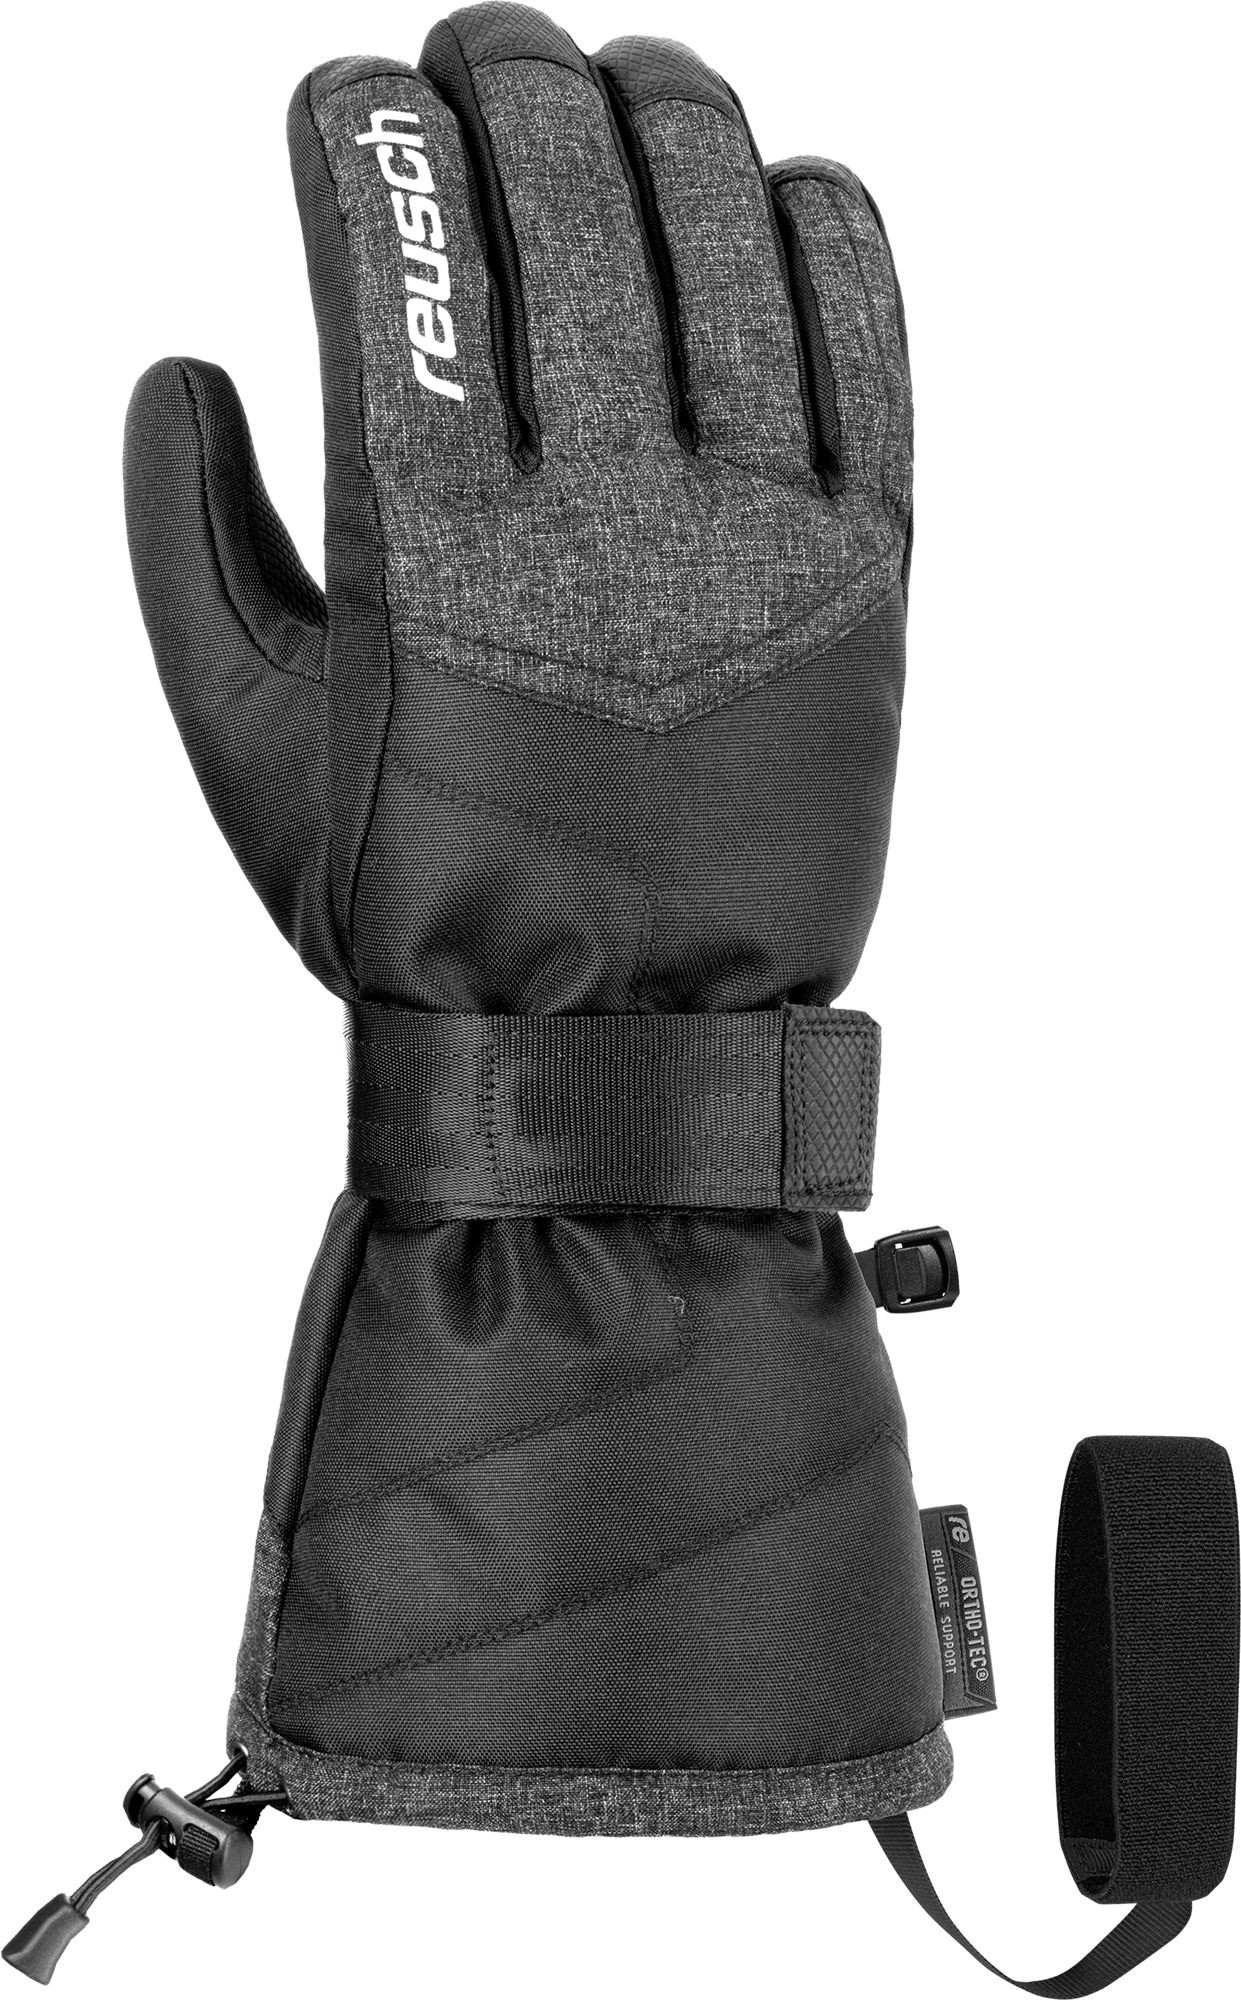 New Reusch Snow Board Gloves Wrist Protection Iguana RtexXT Medium